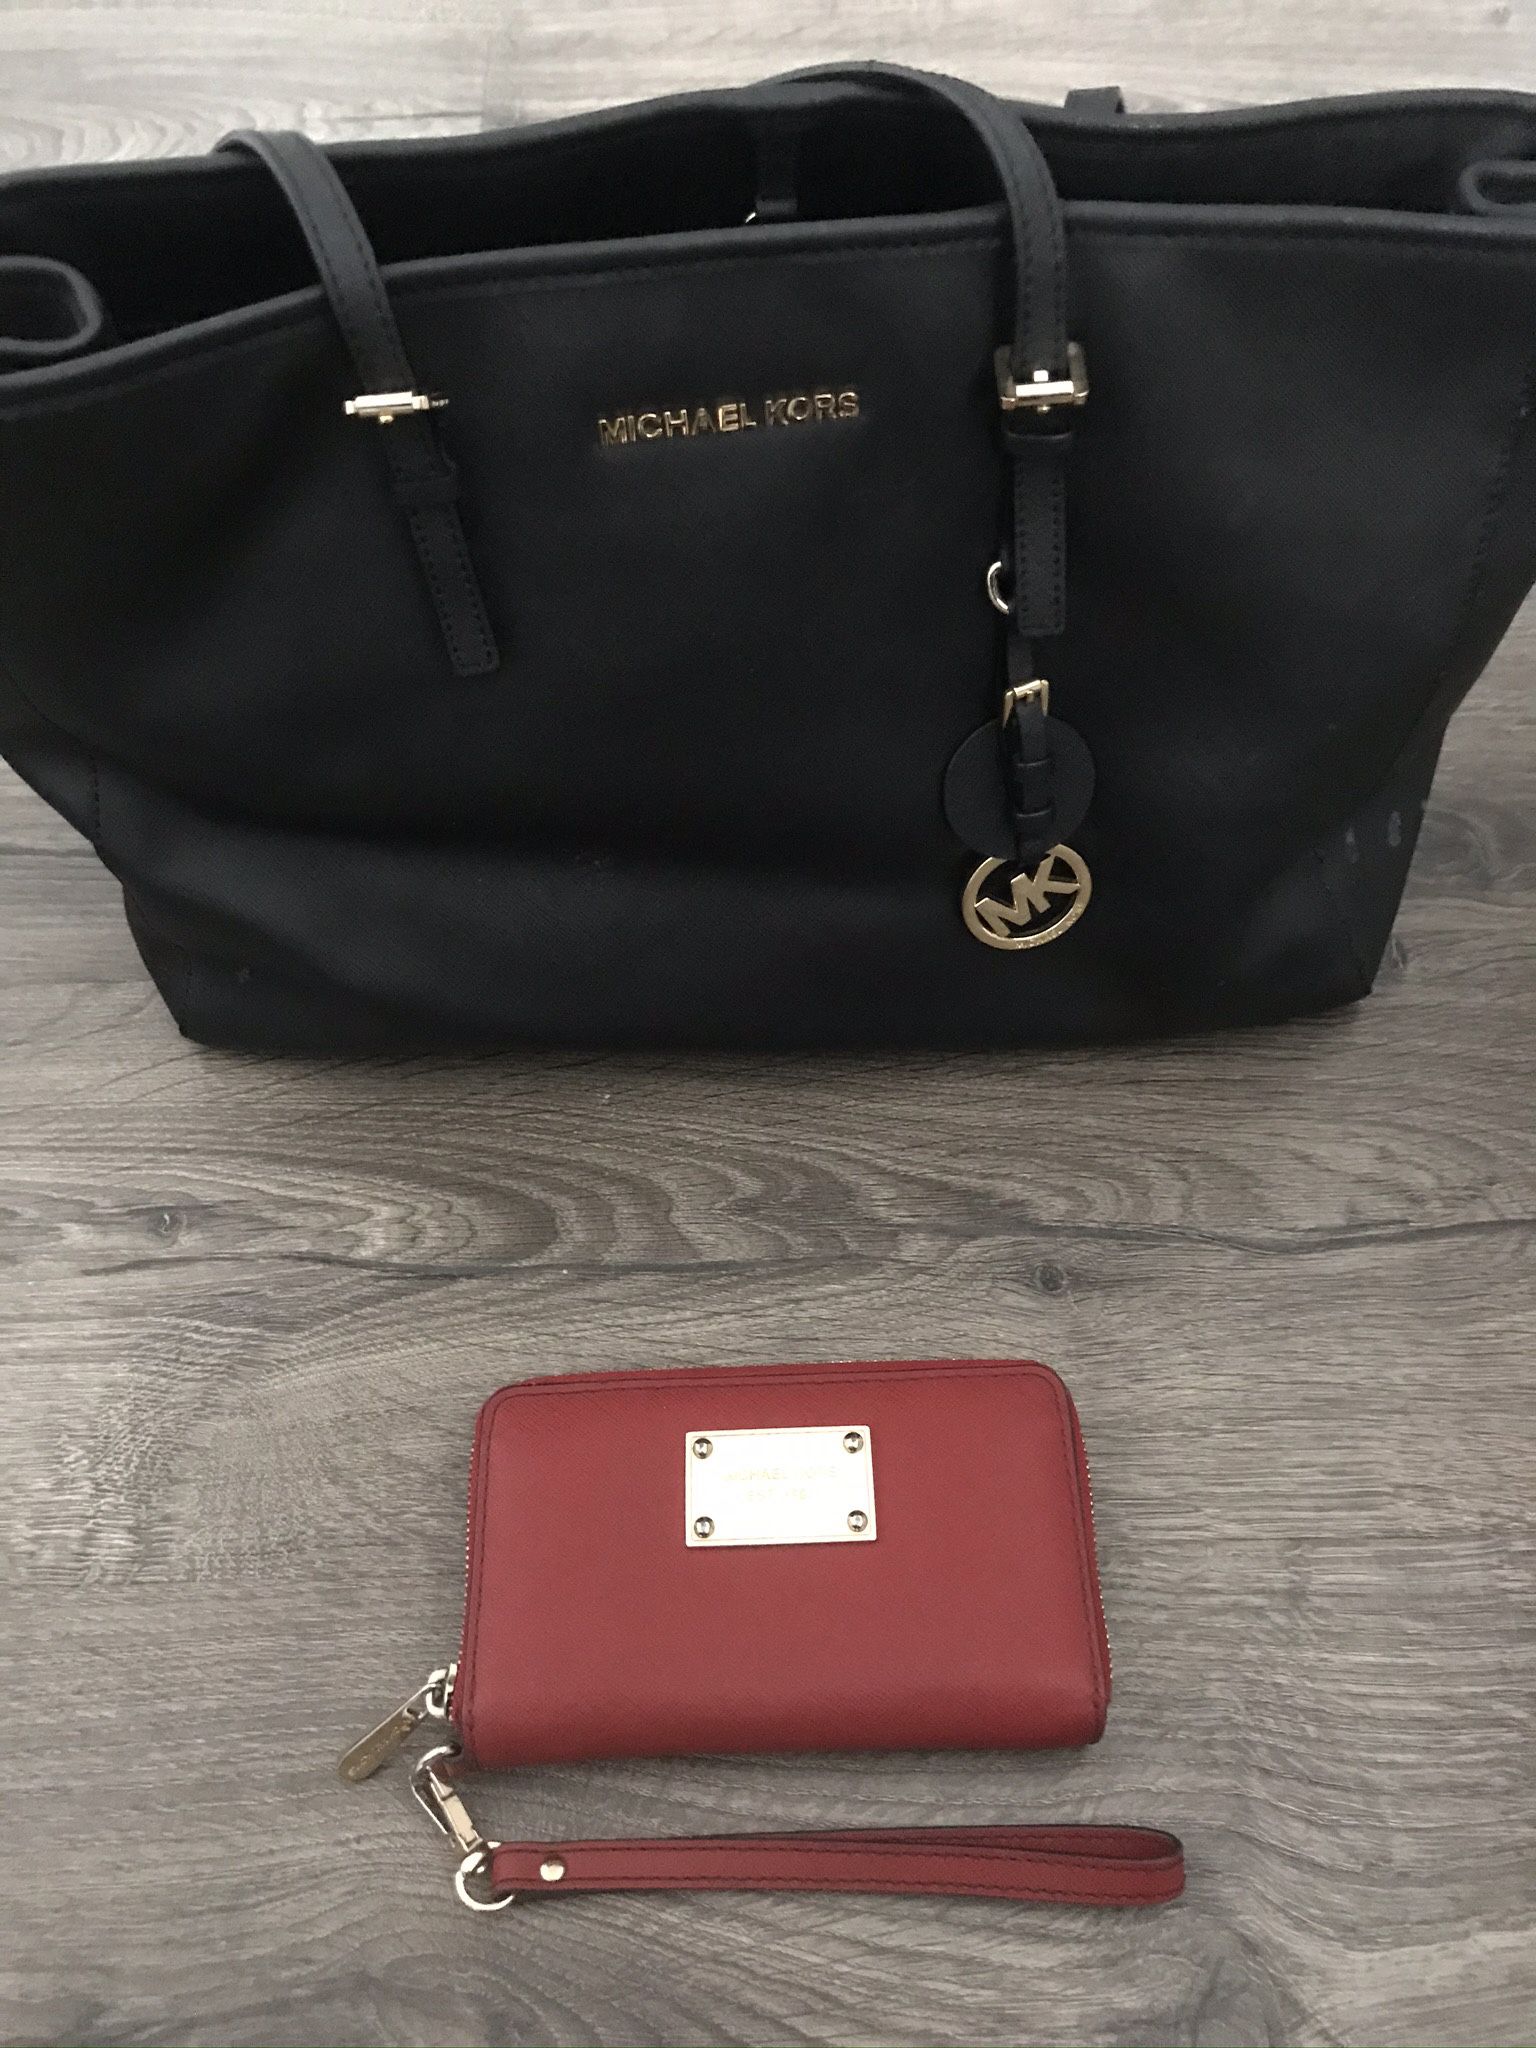  Michael Kors purse and wallet set